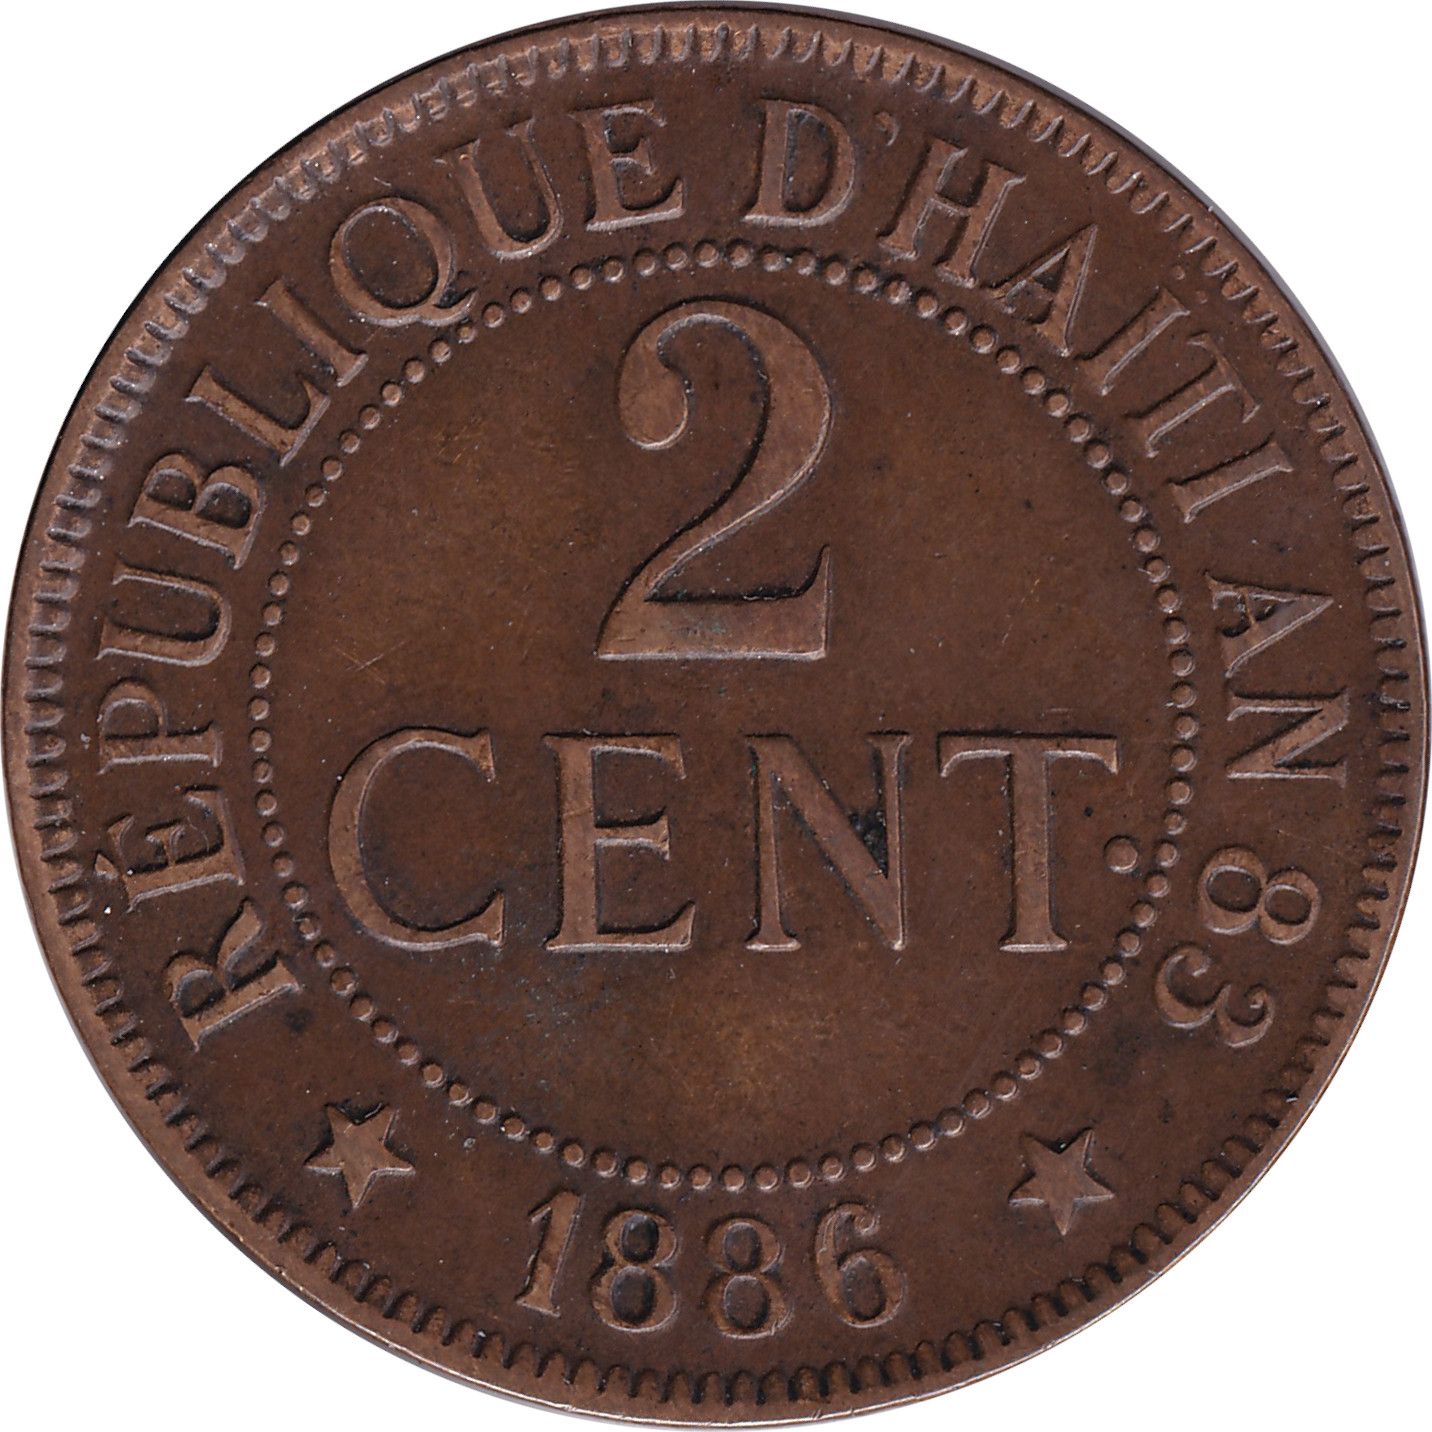 2 centimes - Armoiries